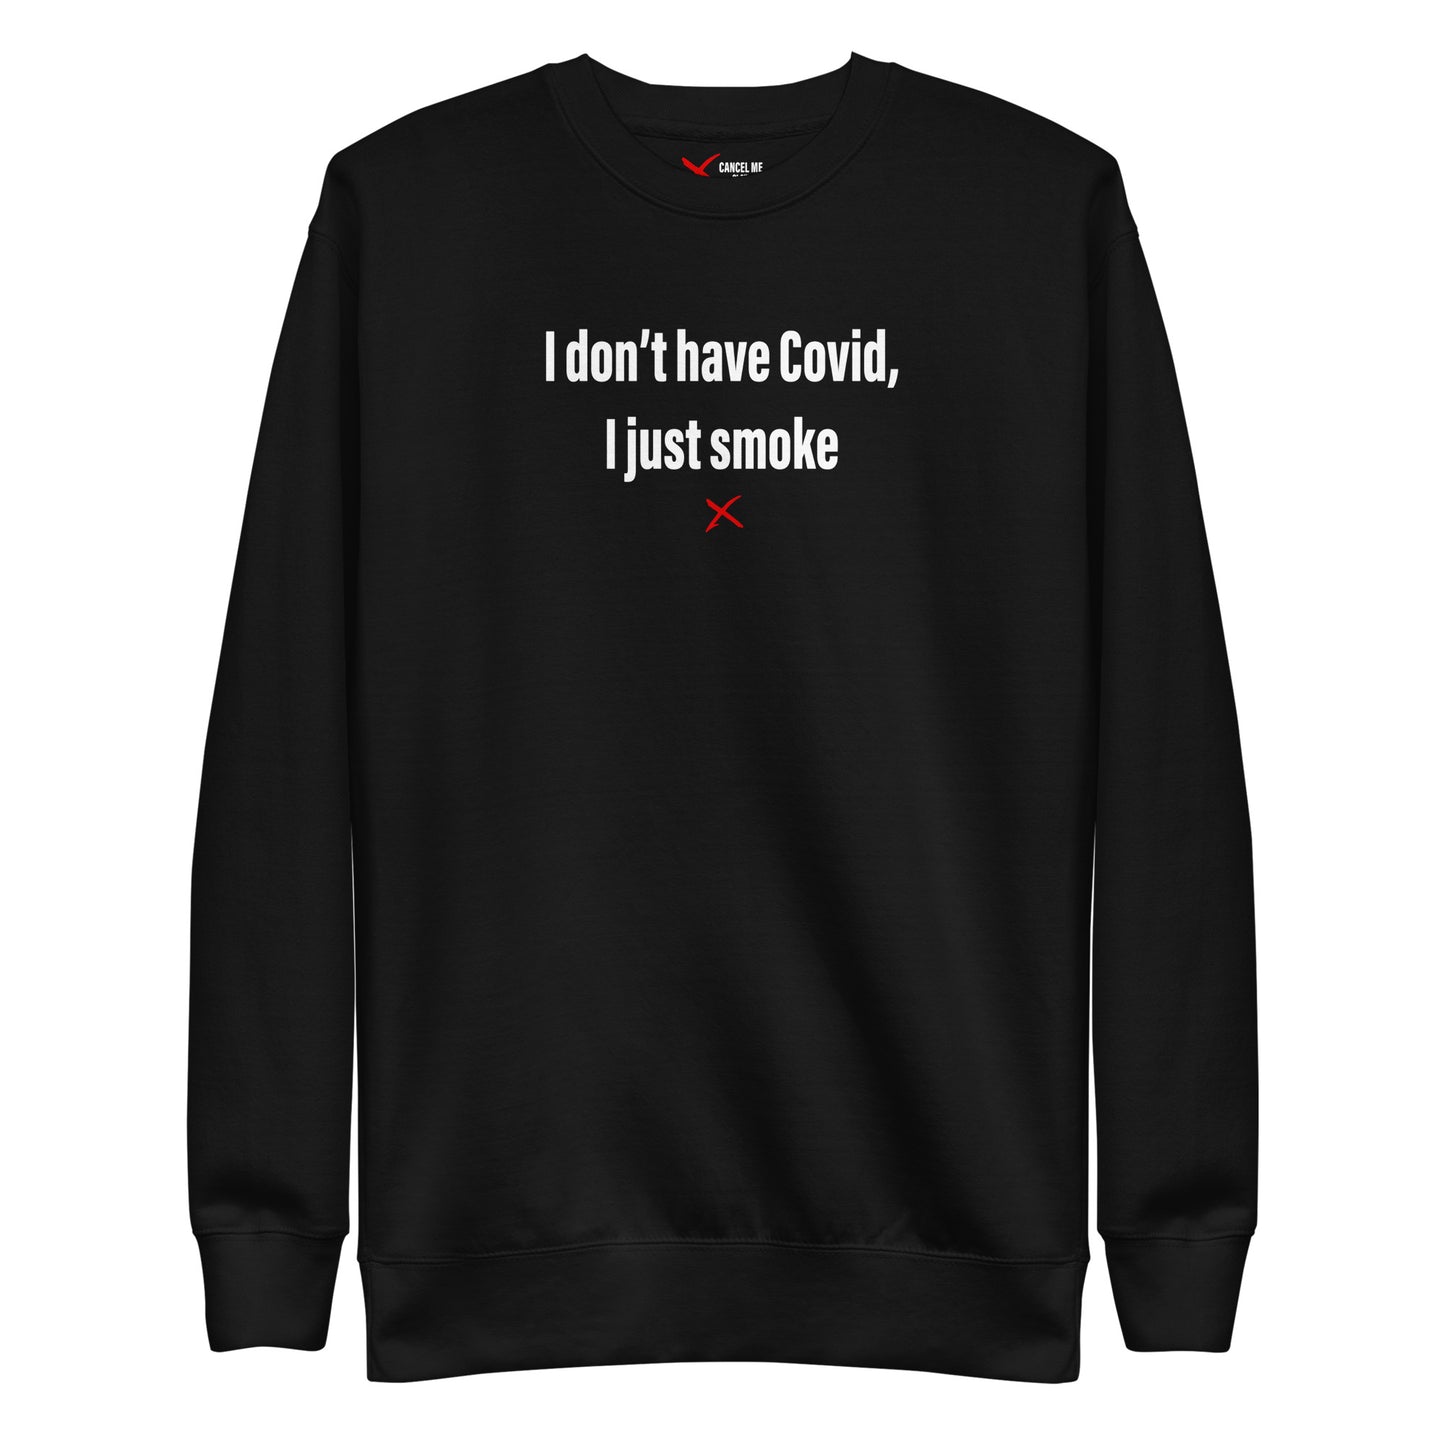 I don't have Covid, I just smoke - Sweatshirt